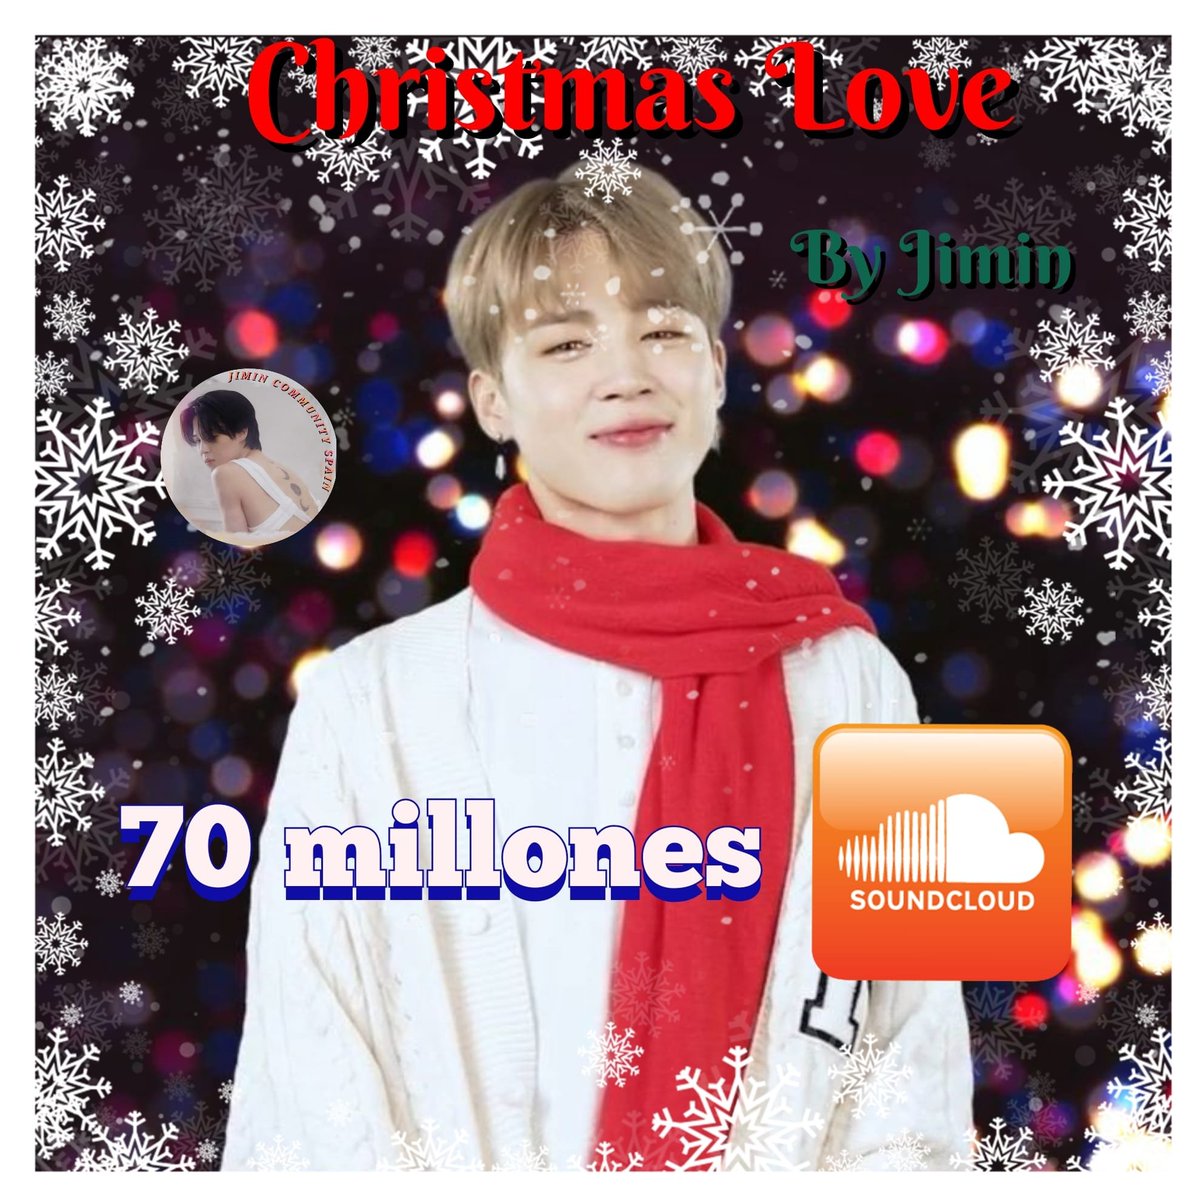 #ChristmasLove de #Jimin supera los 70 millones de streams en SoundCloud. 💛

CONGRATULATIONS JIMIN
SOBOK SOBOK ❄️